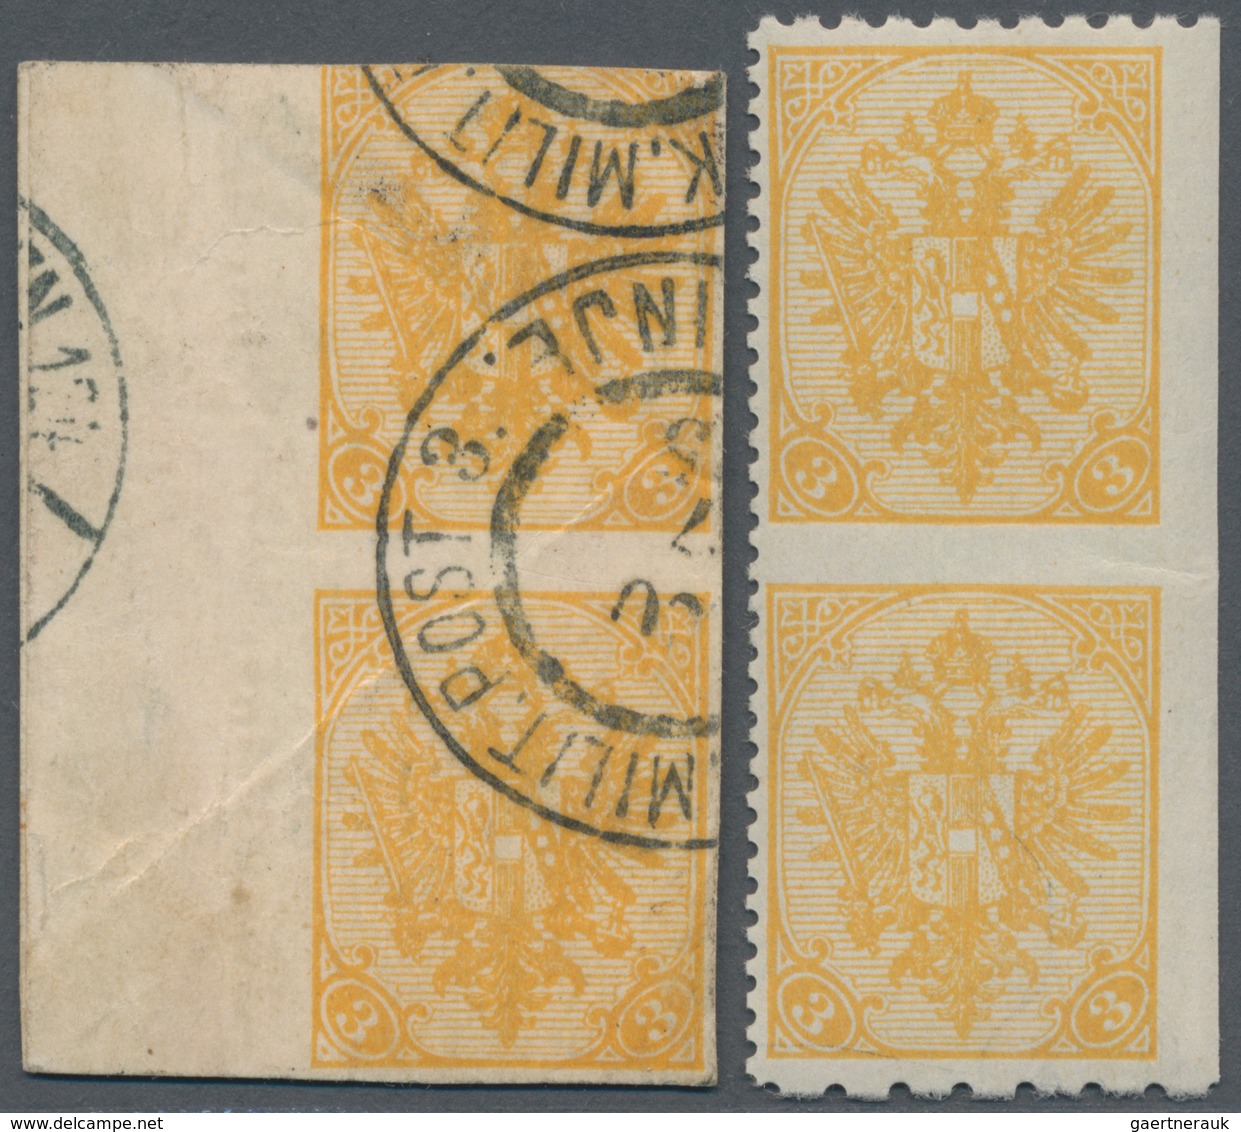 Bosnien Und Herzegowina: 1900, Definitives "Double Eagle", 3h. Yellow, Specialised Assortment Of 15 - Bosnie-Herzegovine